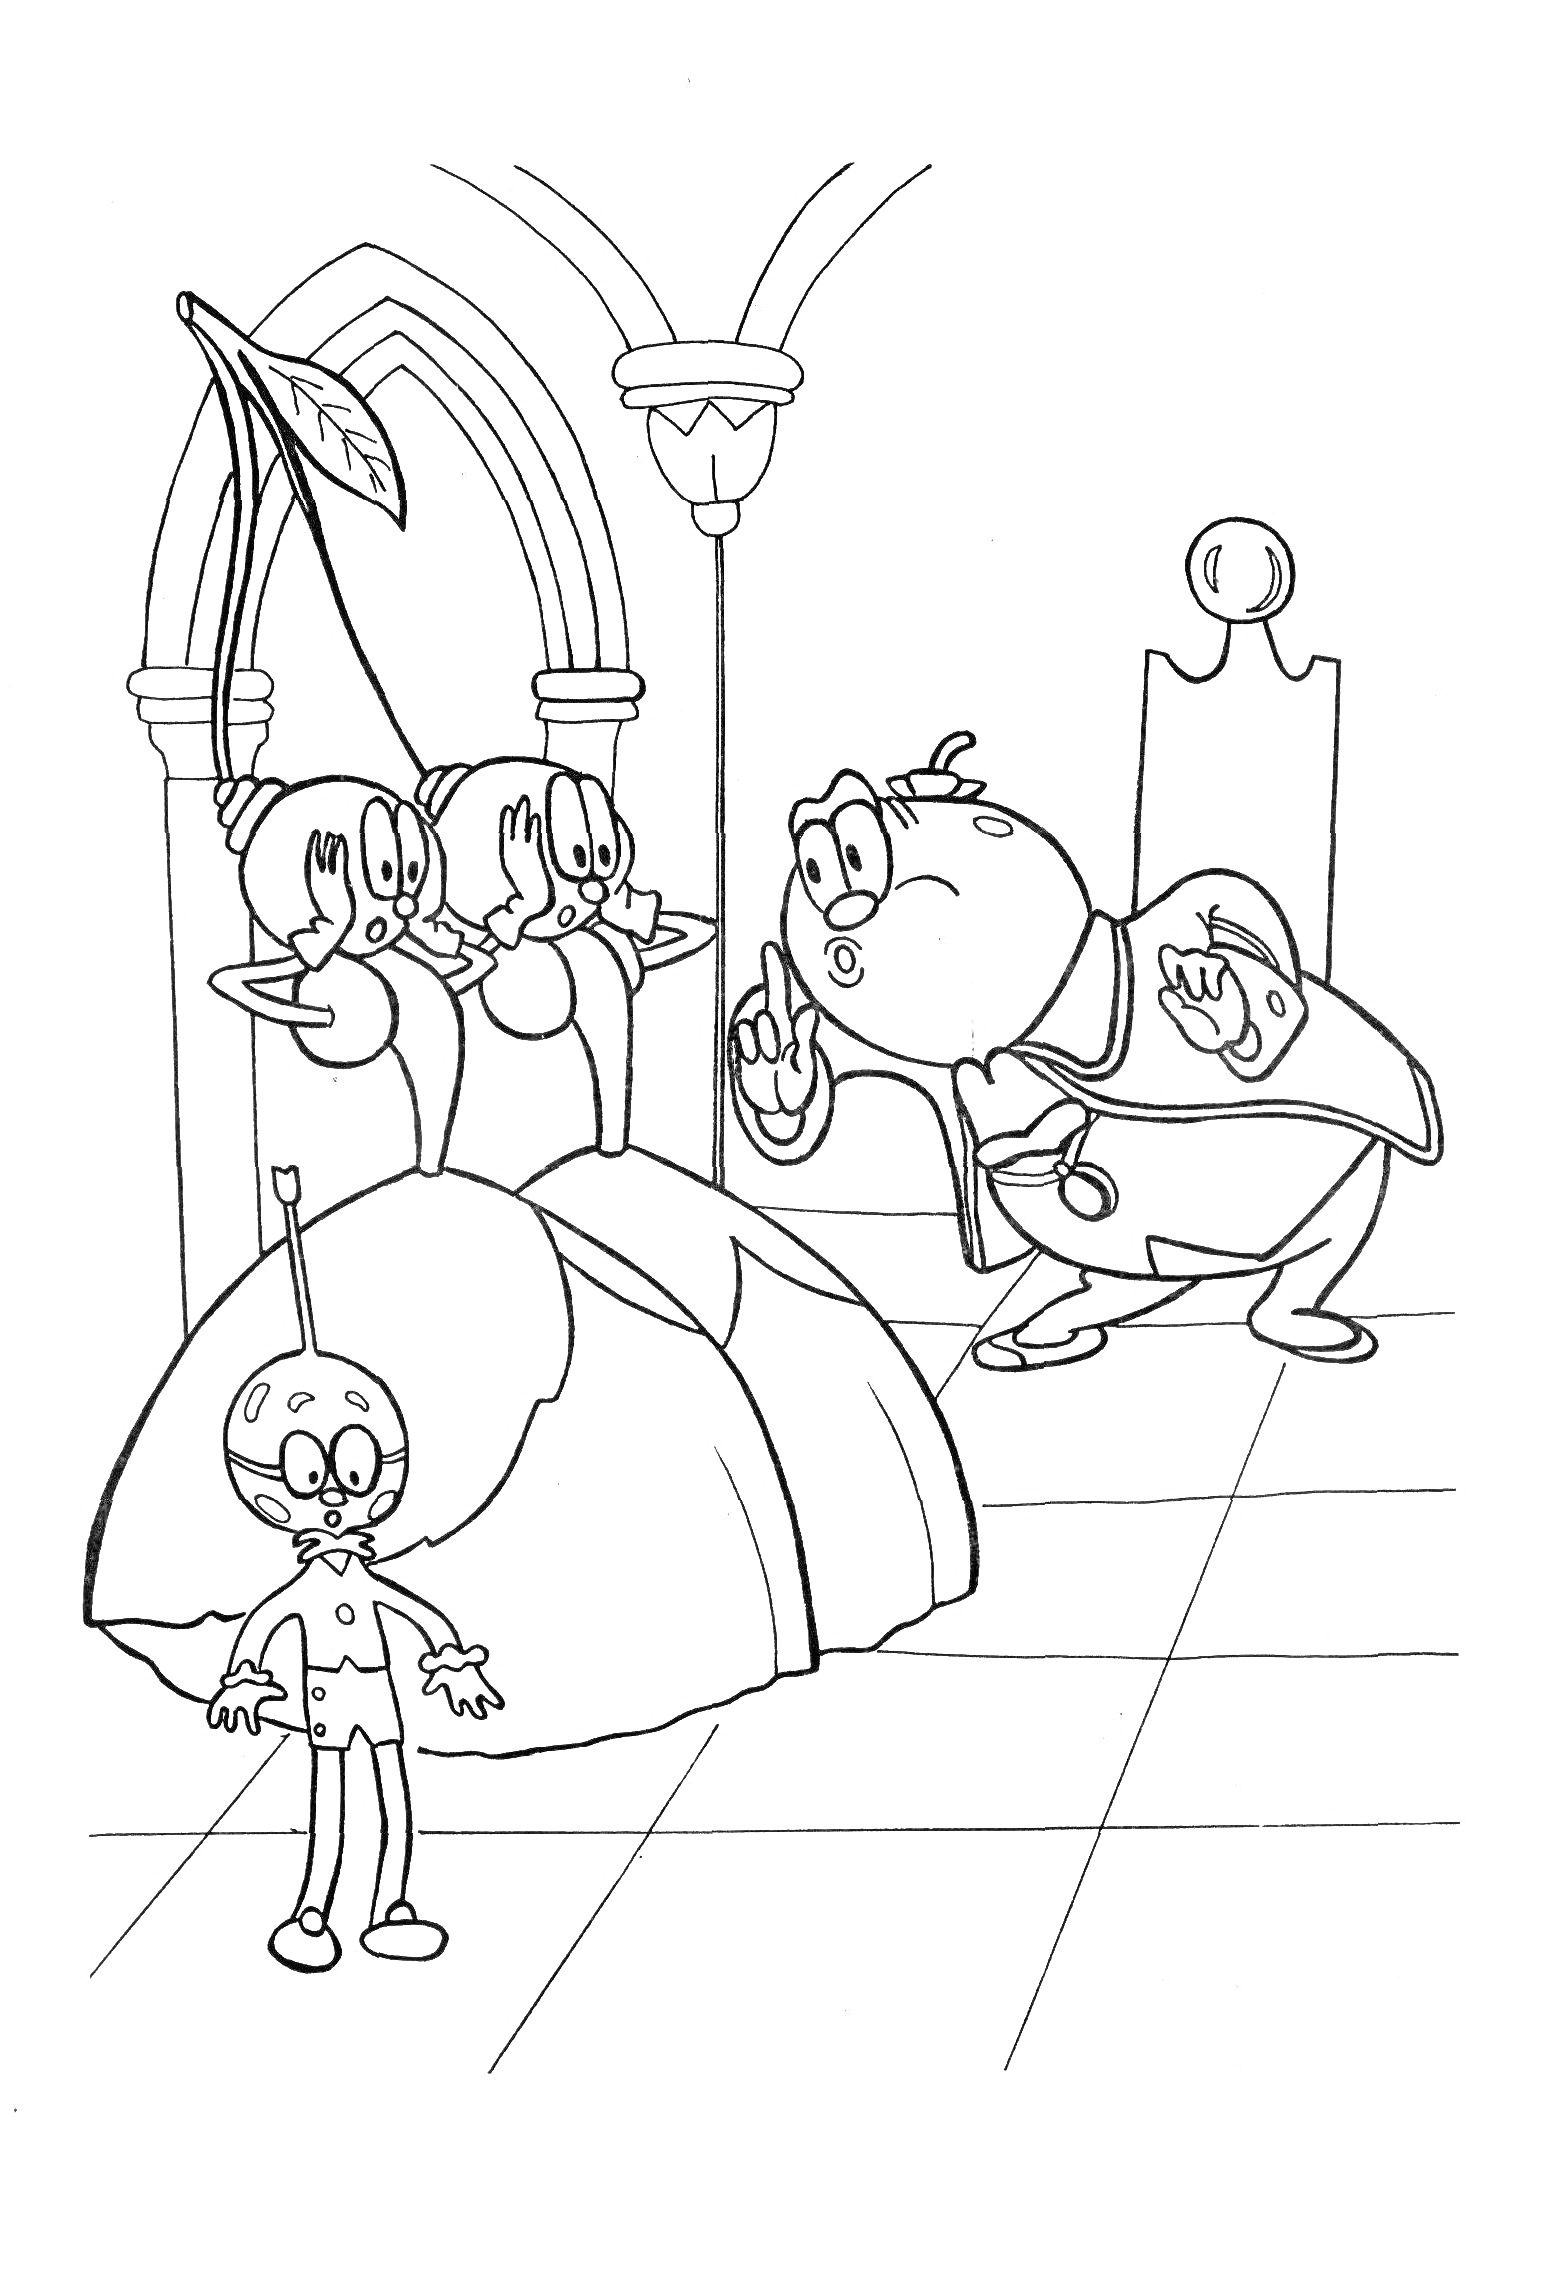 Раскраска Чиполлино со светлой луковицей и персонажи в замке на фоне арки